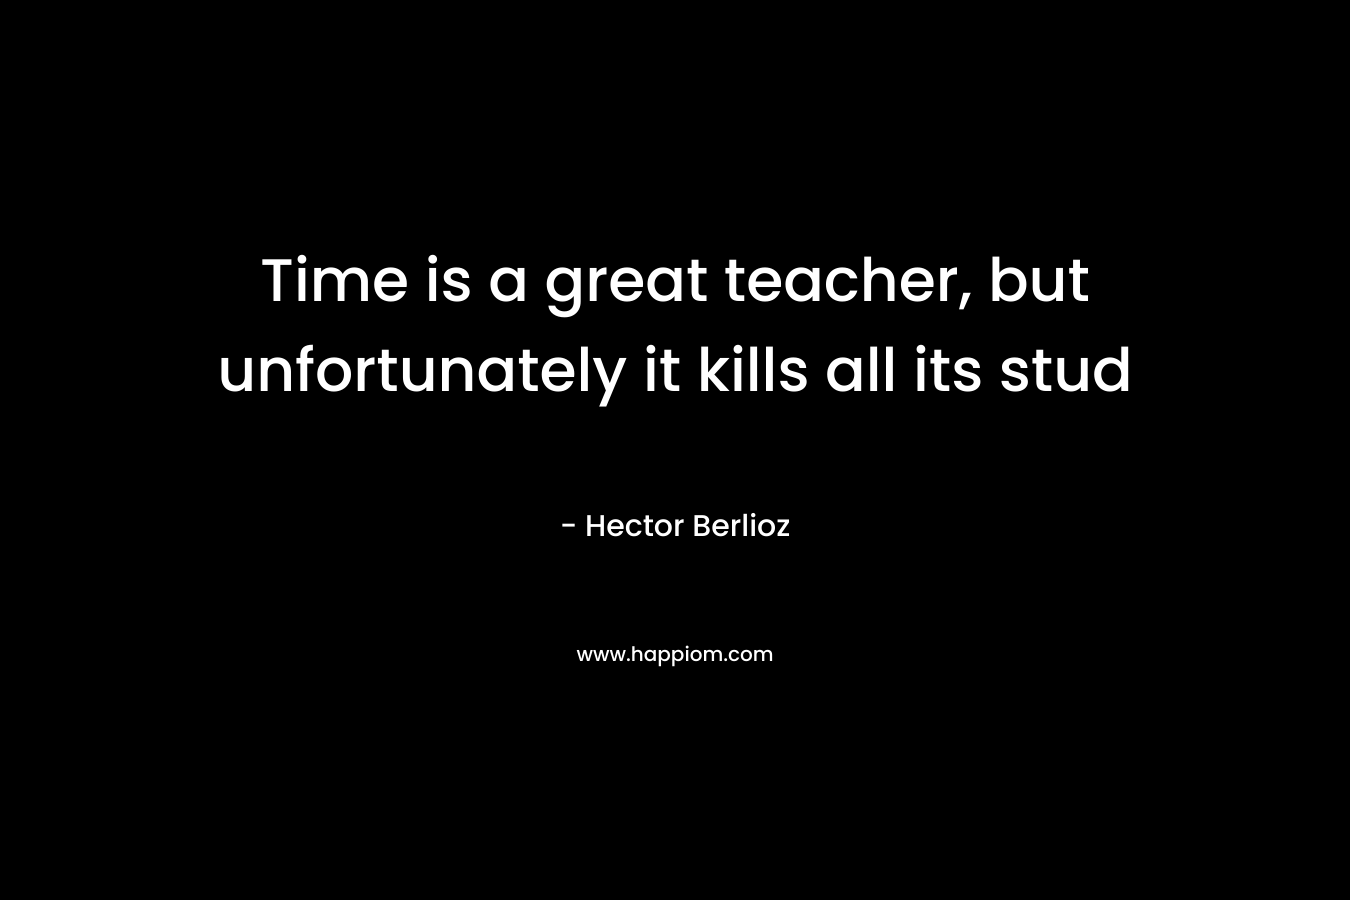 Time is a great teacher, but unfortunately it kills all its stud